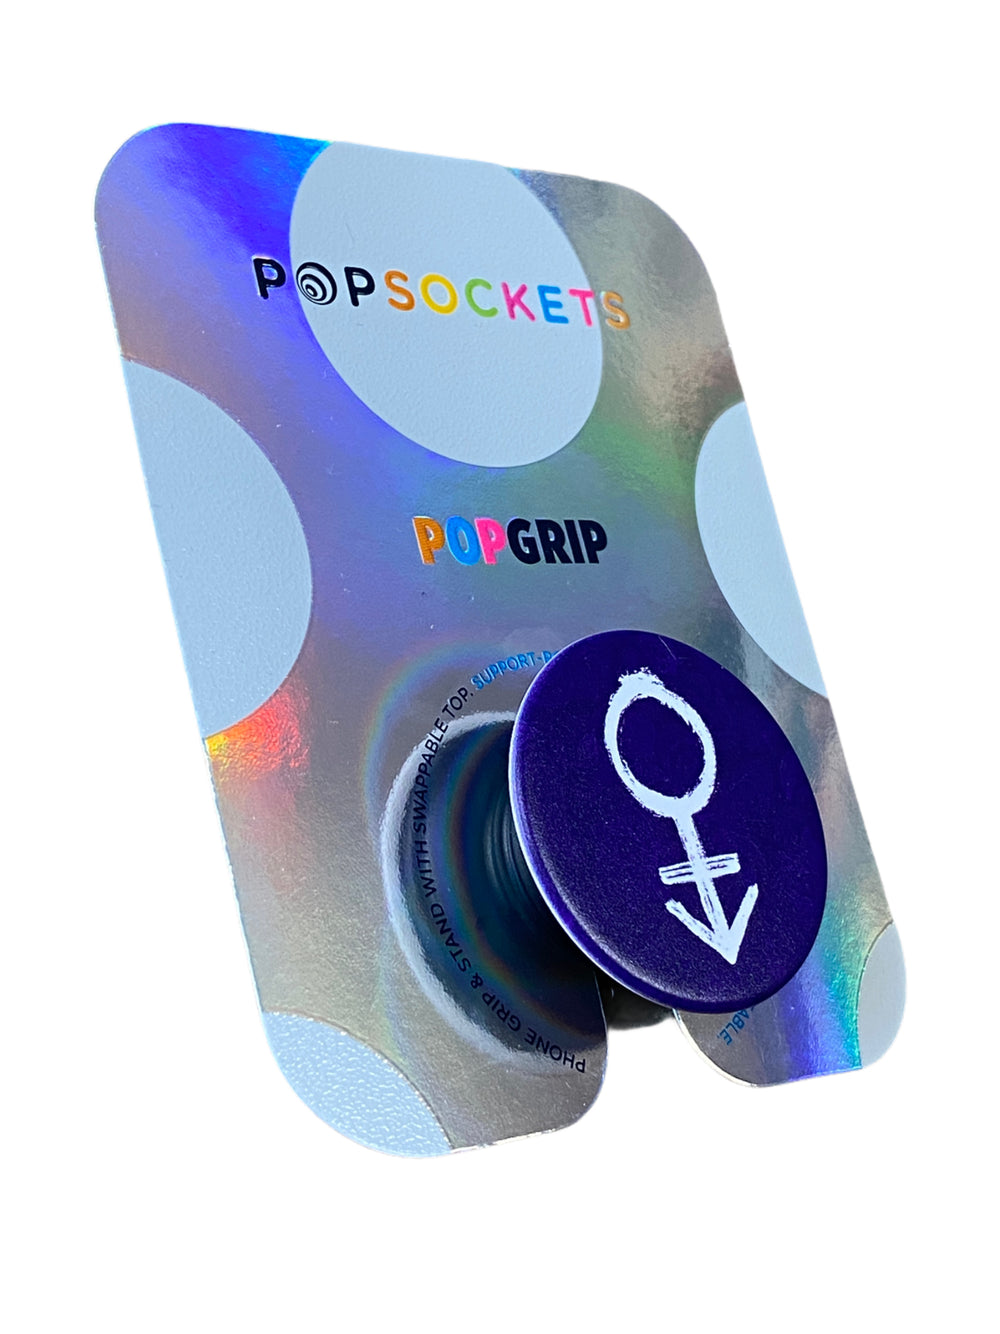 Prince – Official Estate Phone Popsocket Pop Grip Purple Rain Symbol